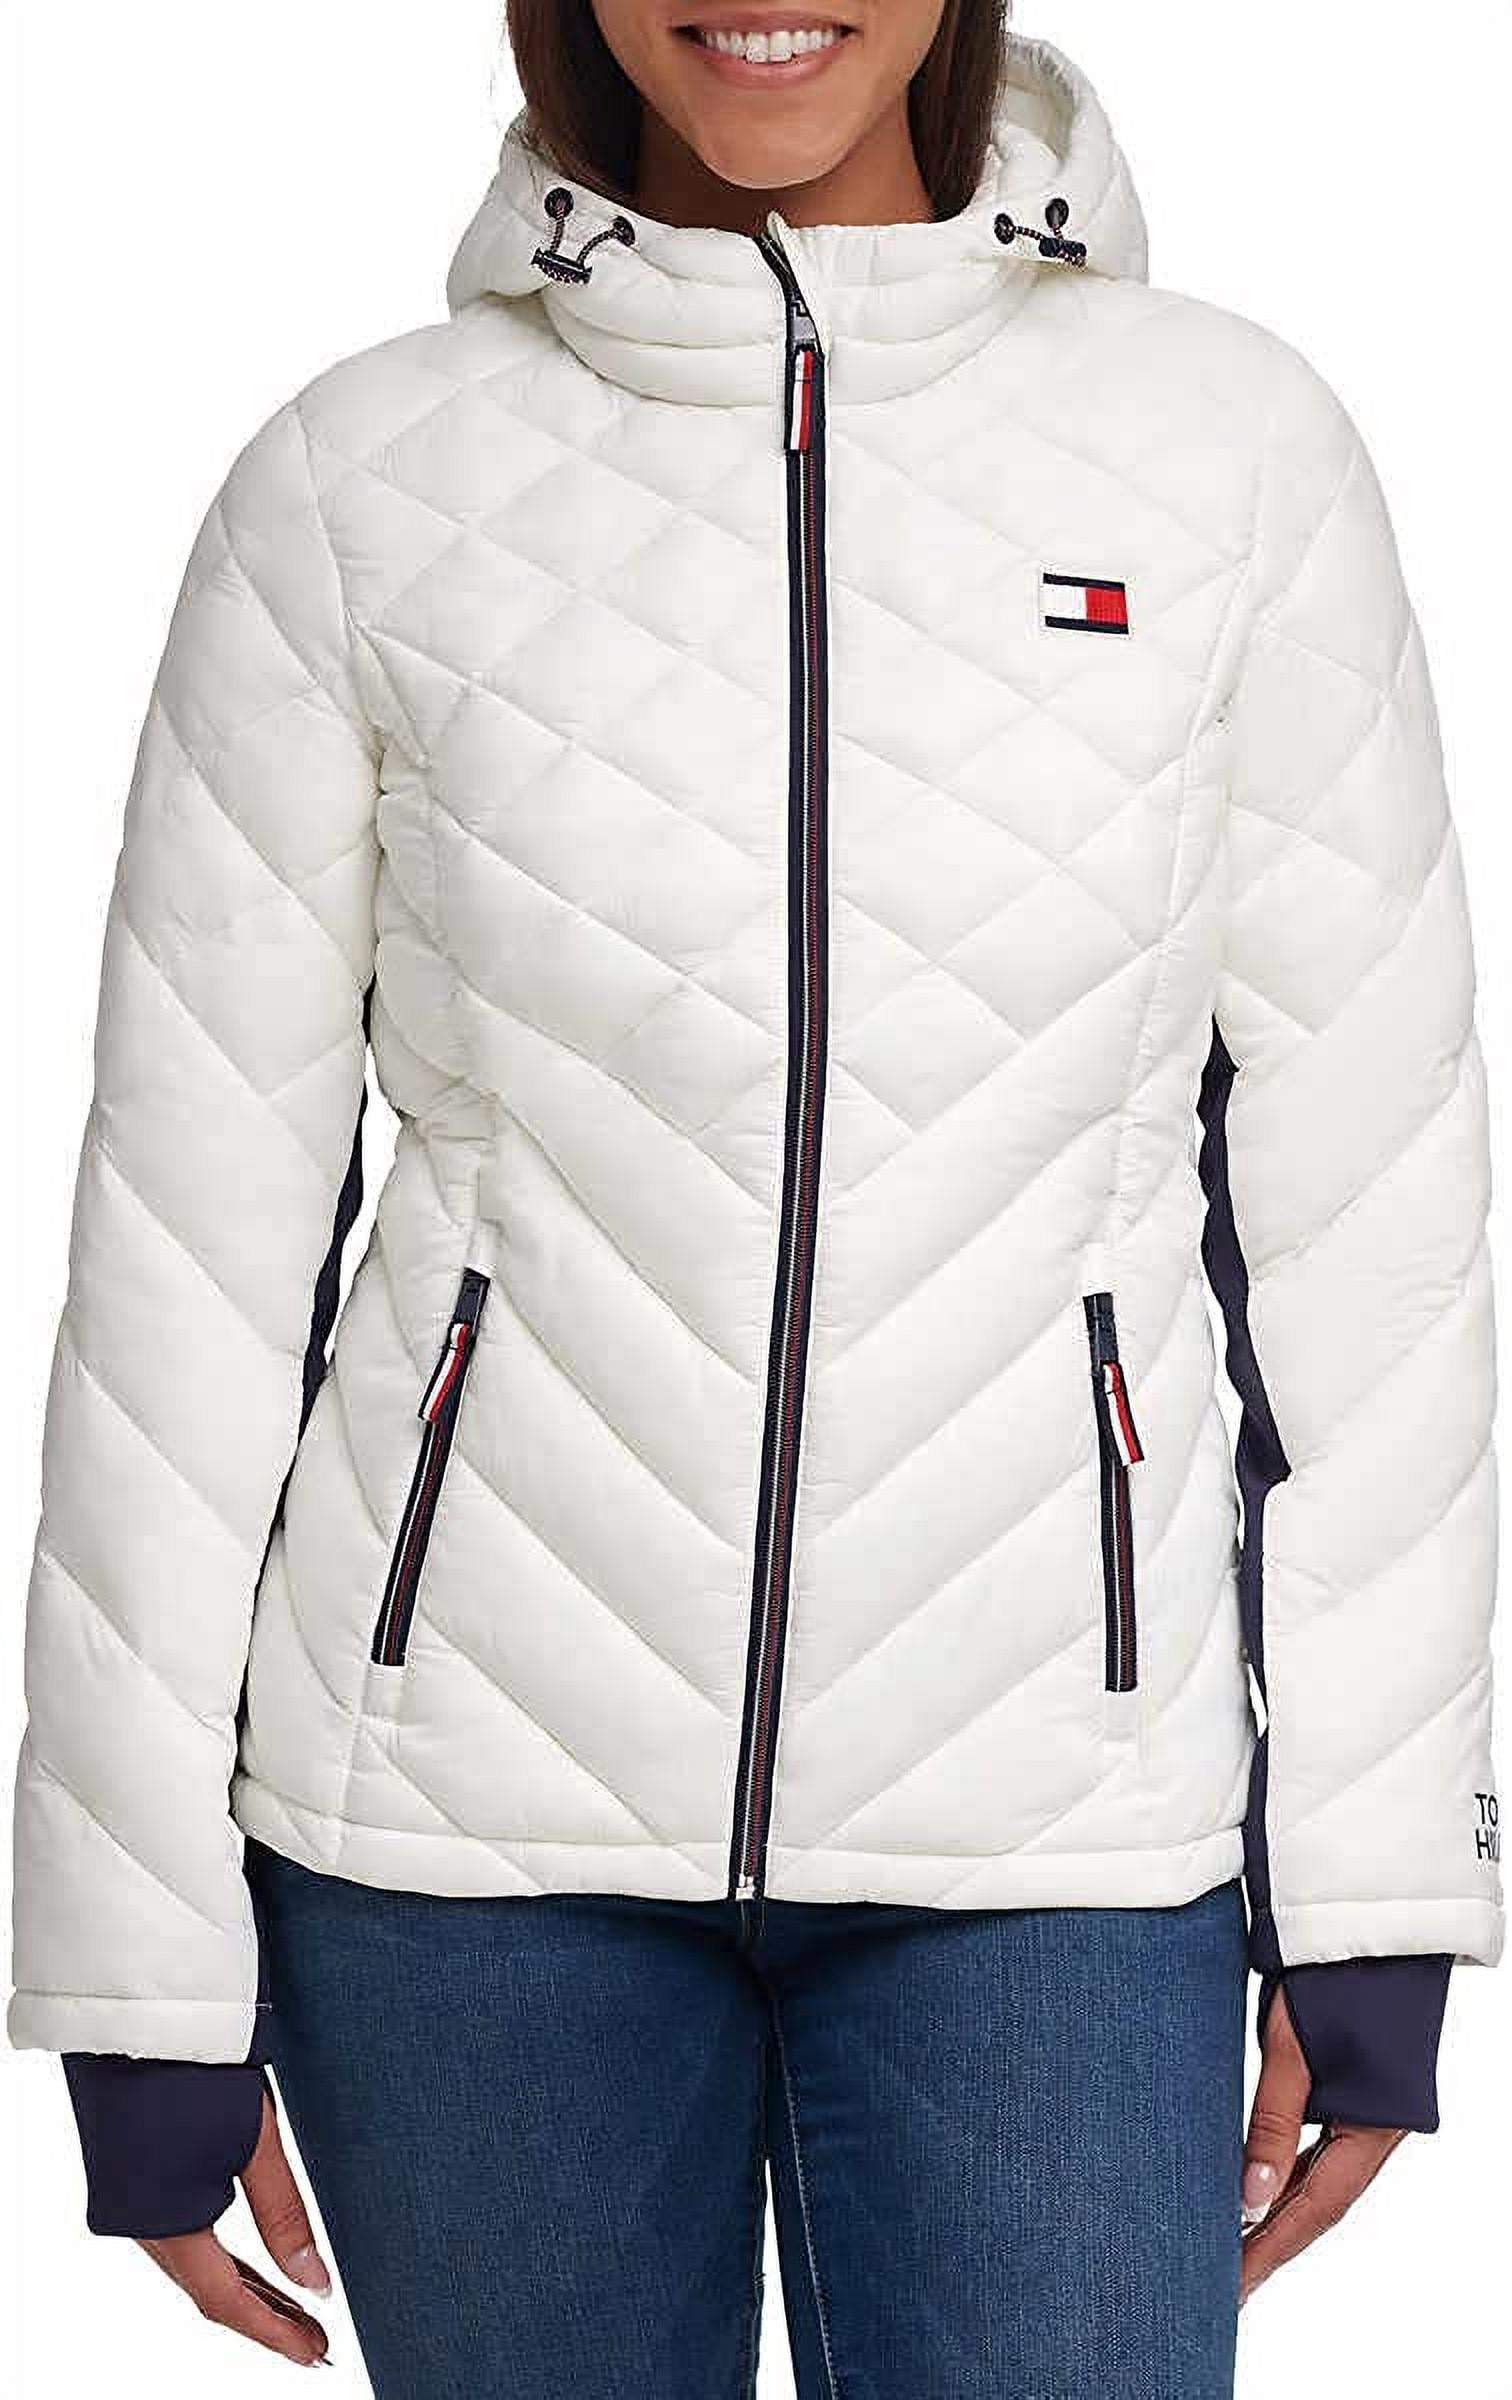 interferens Uden tvivl dobbelt Tommy Hilfiger Womens Packable Hooded Puffer Jacket(White,XL) - Walmart.com